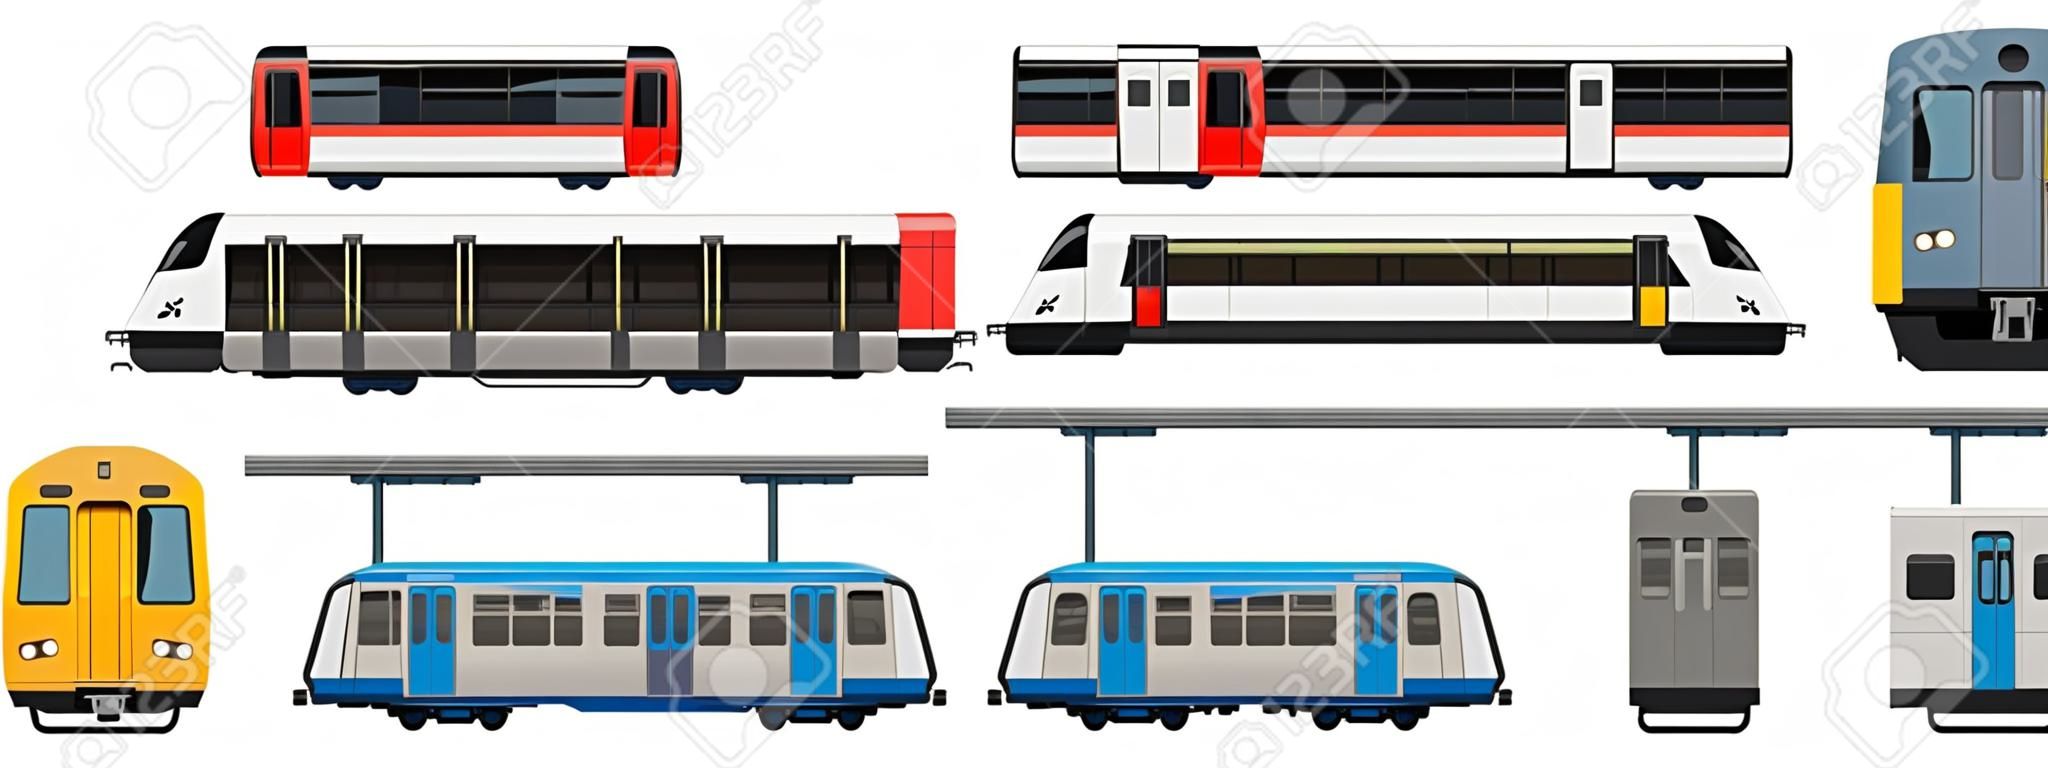 Metro trein pictogrammen ingesteld, cartoon stijl